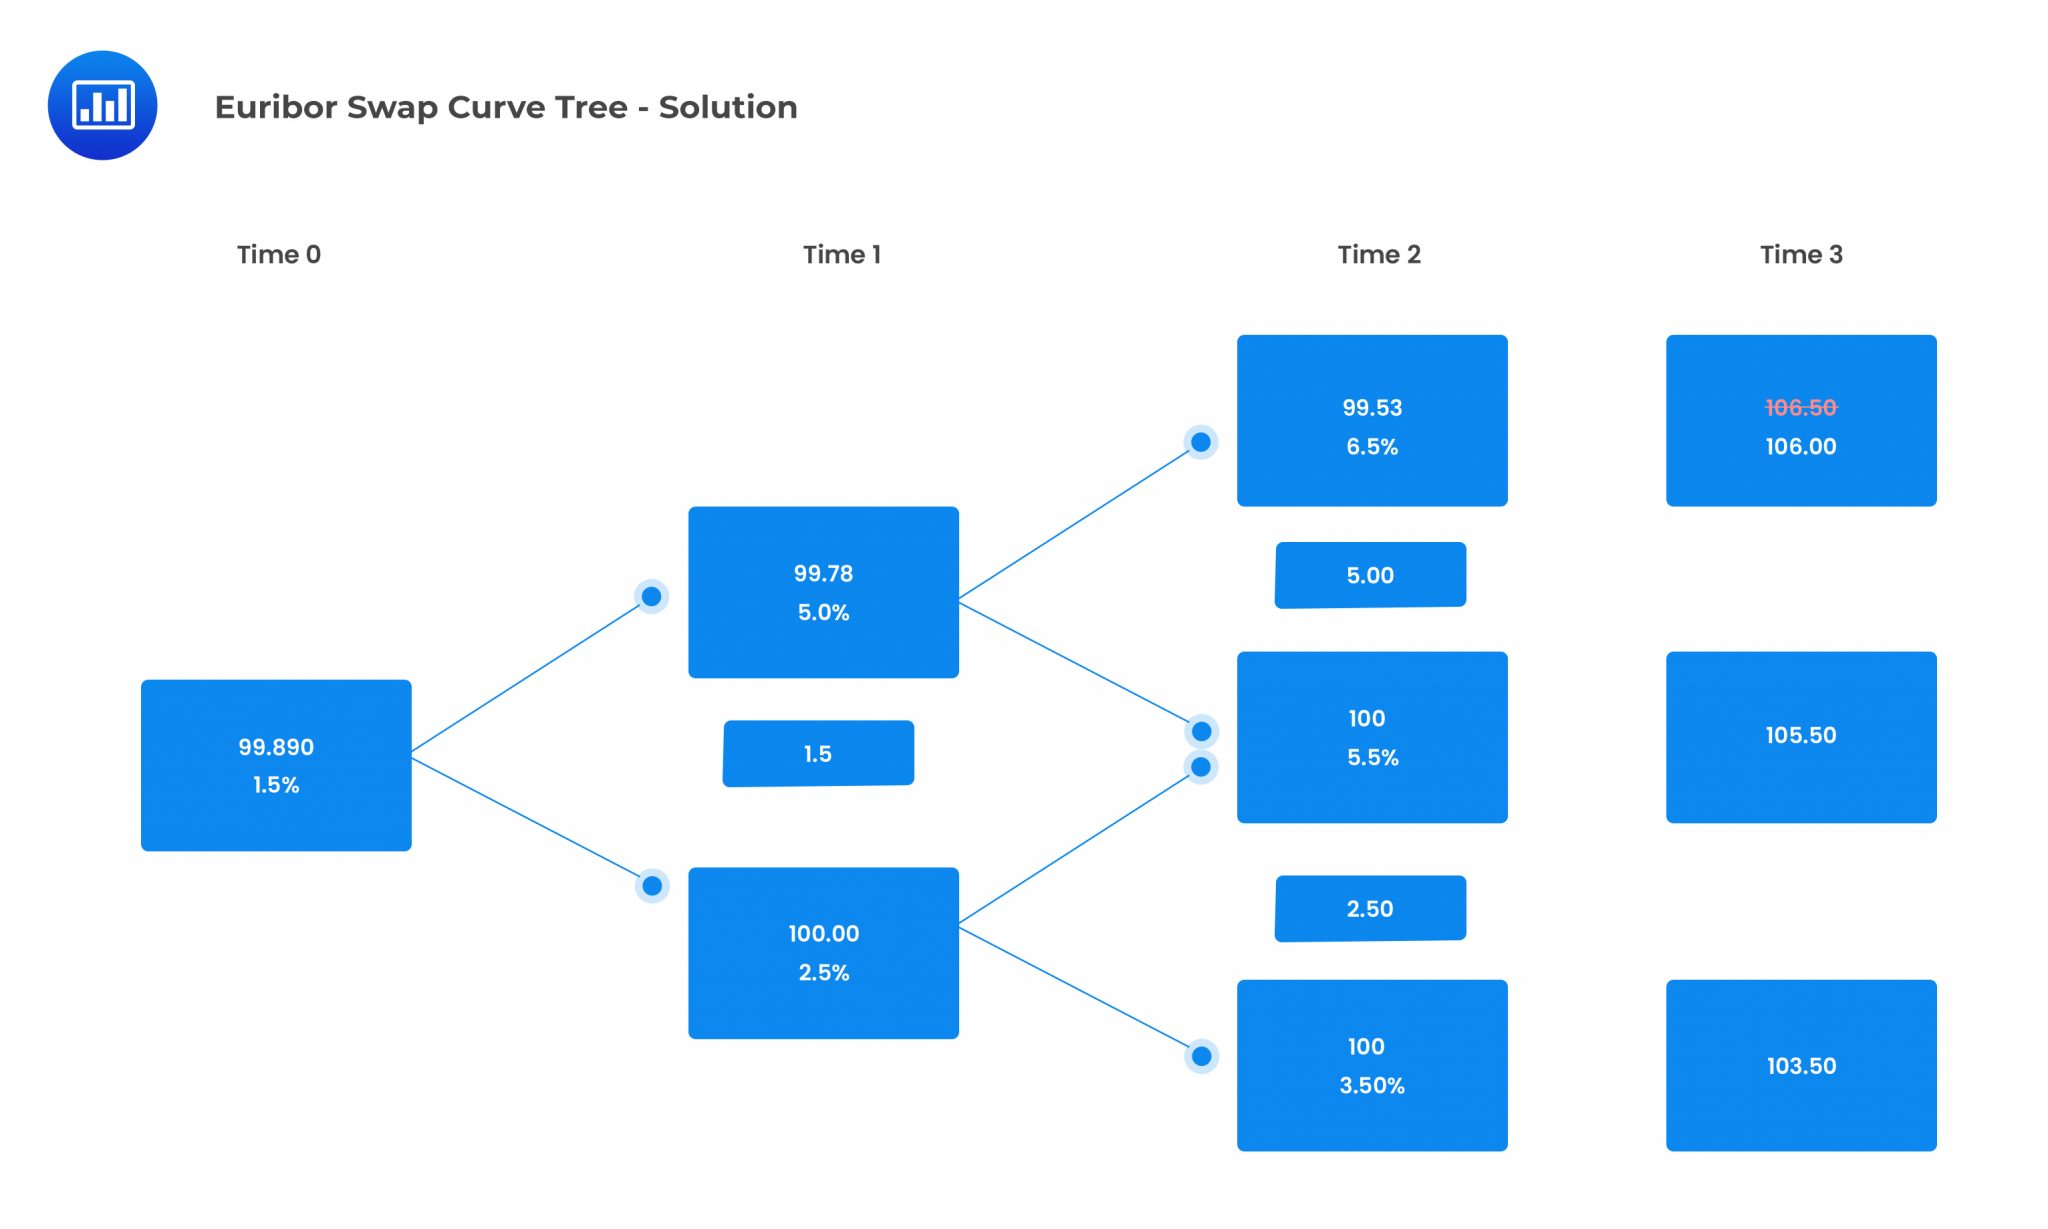 2 - Euribor Swap Curve Tree - Solution